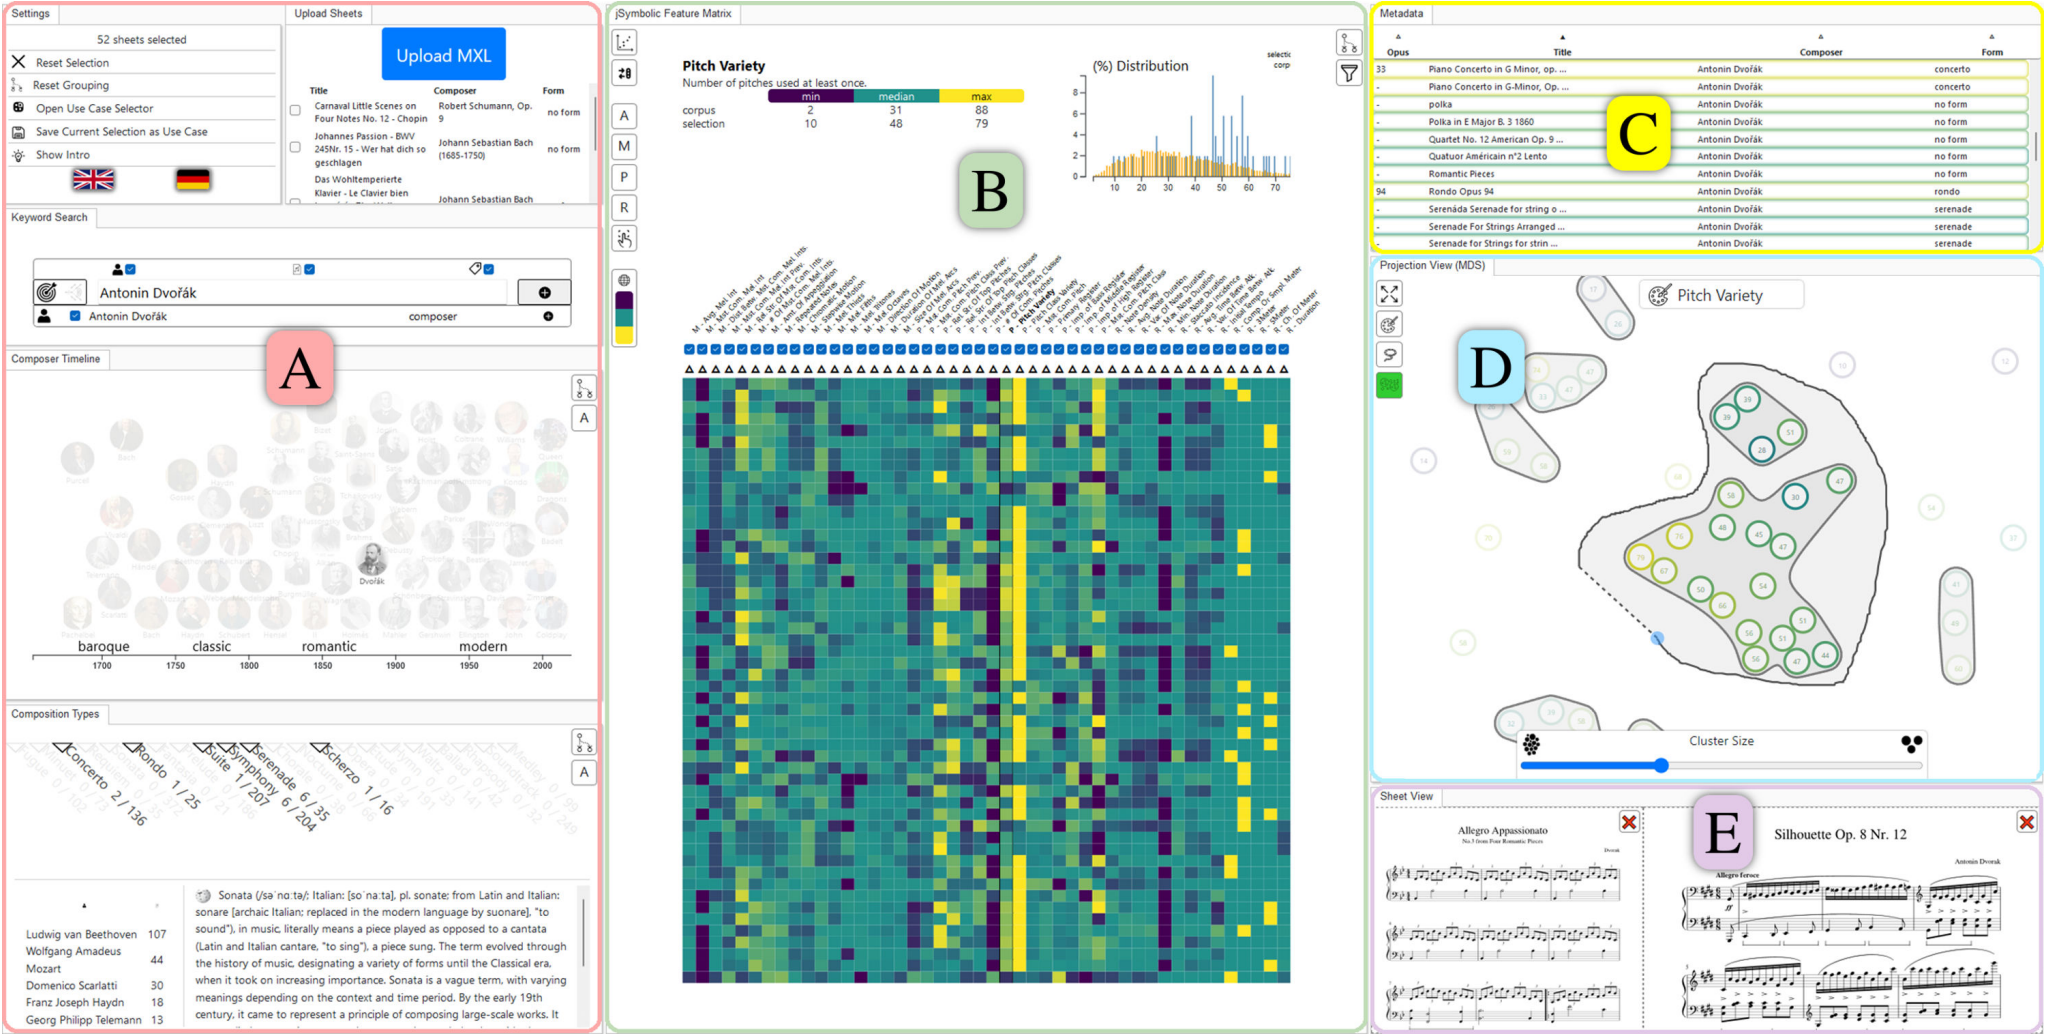 CorpusVis: Visual Analysis of Digital Sheet Music Collections